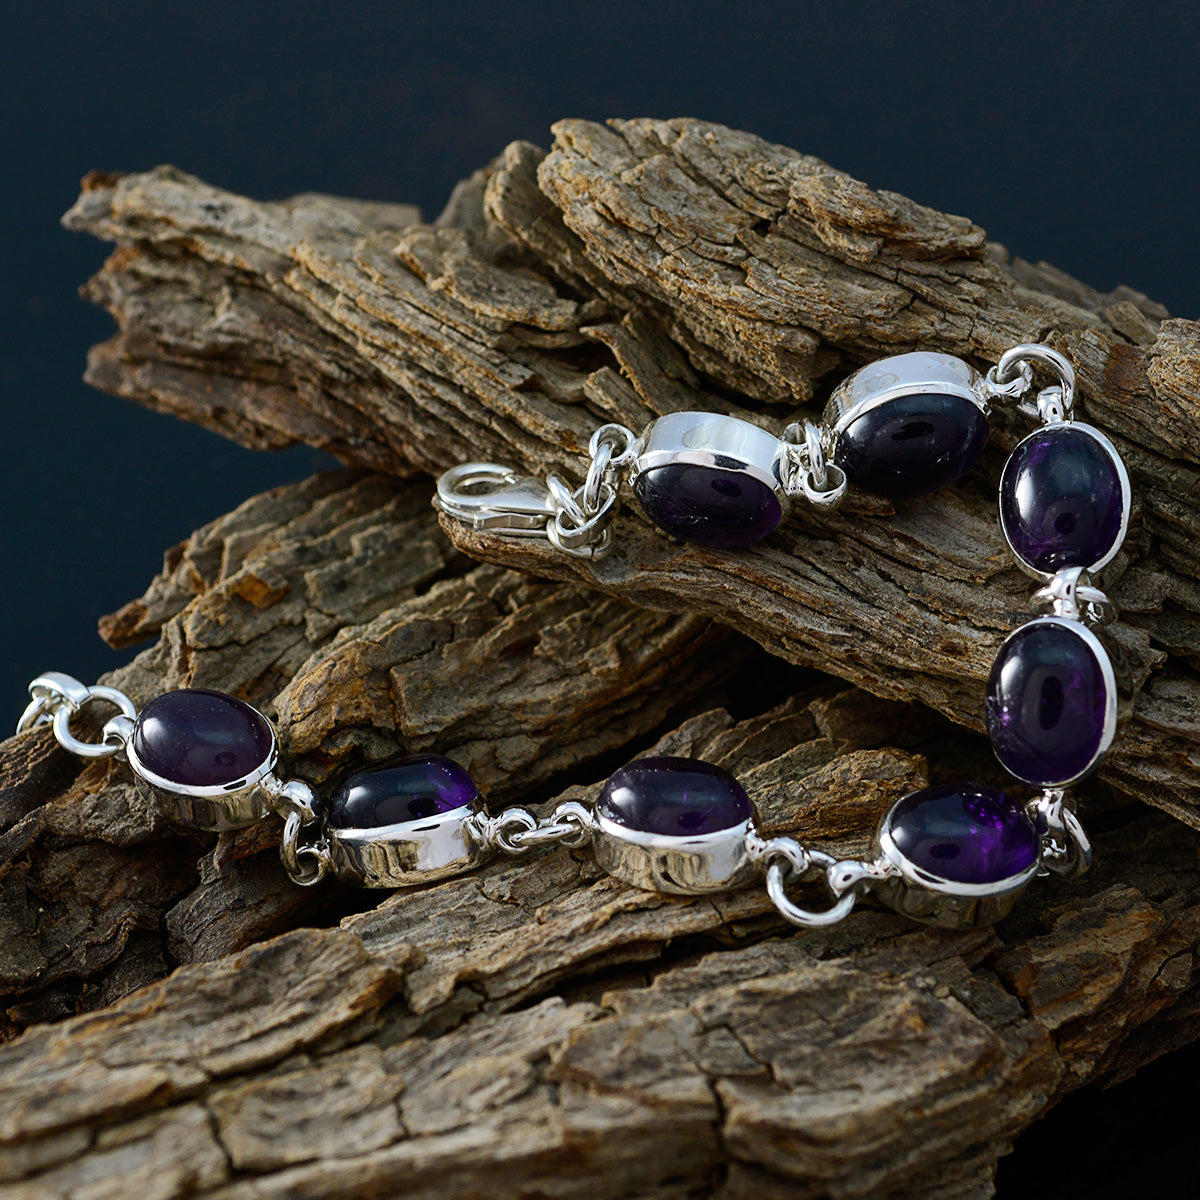 Riyo Nice Gemstone Oval Cabochon Purple Amethyst Silver Bracelet gift for Faishonable day